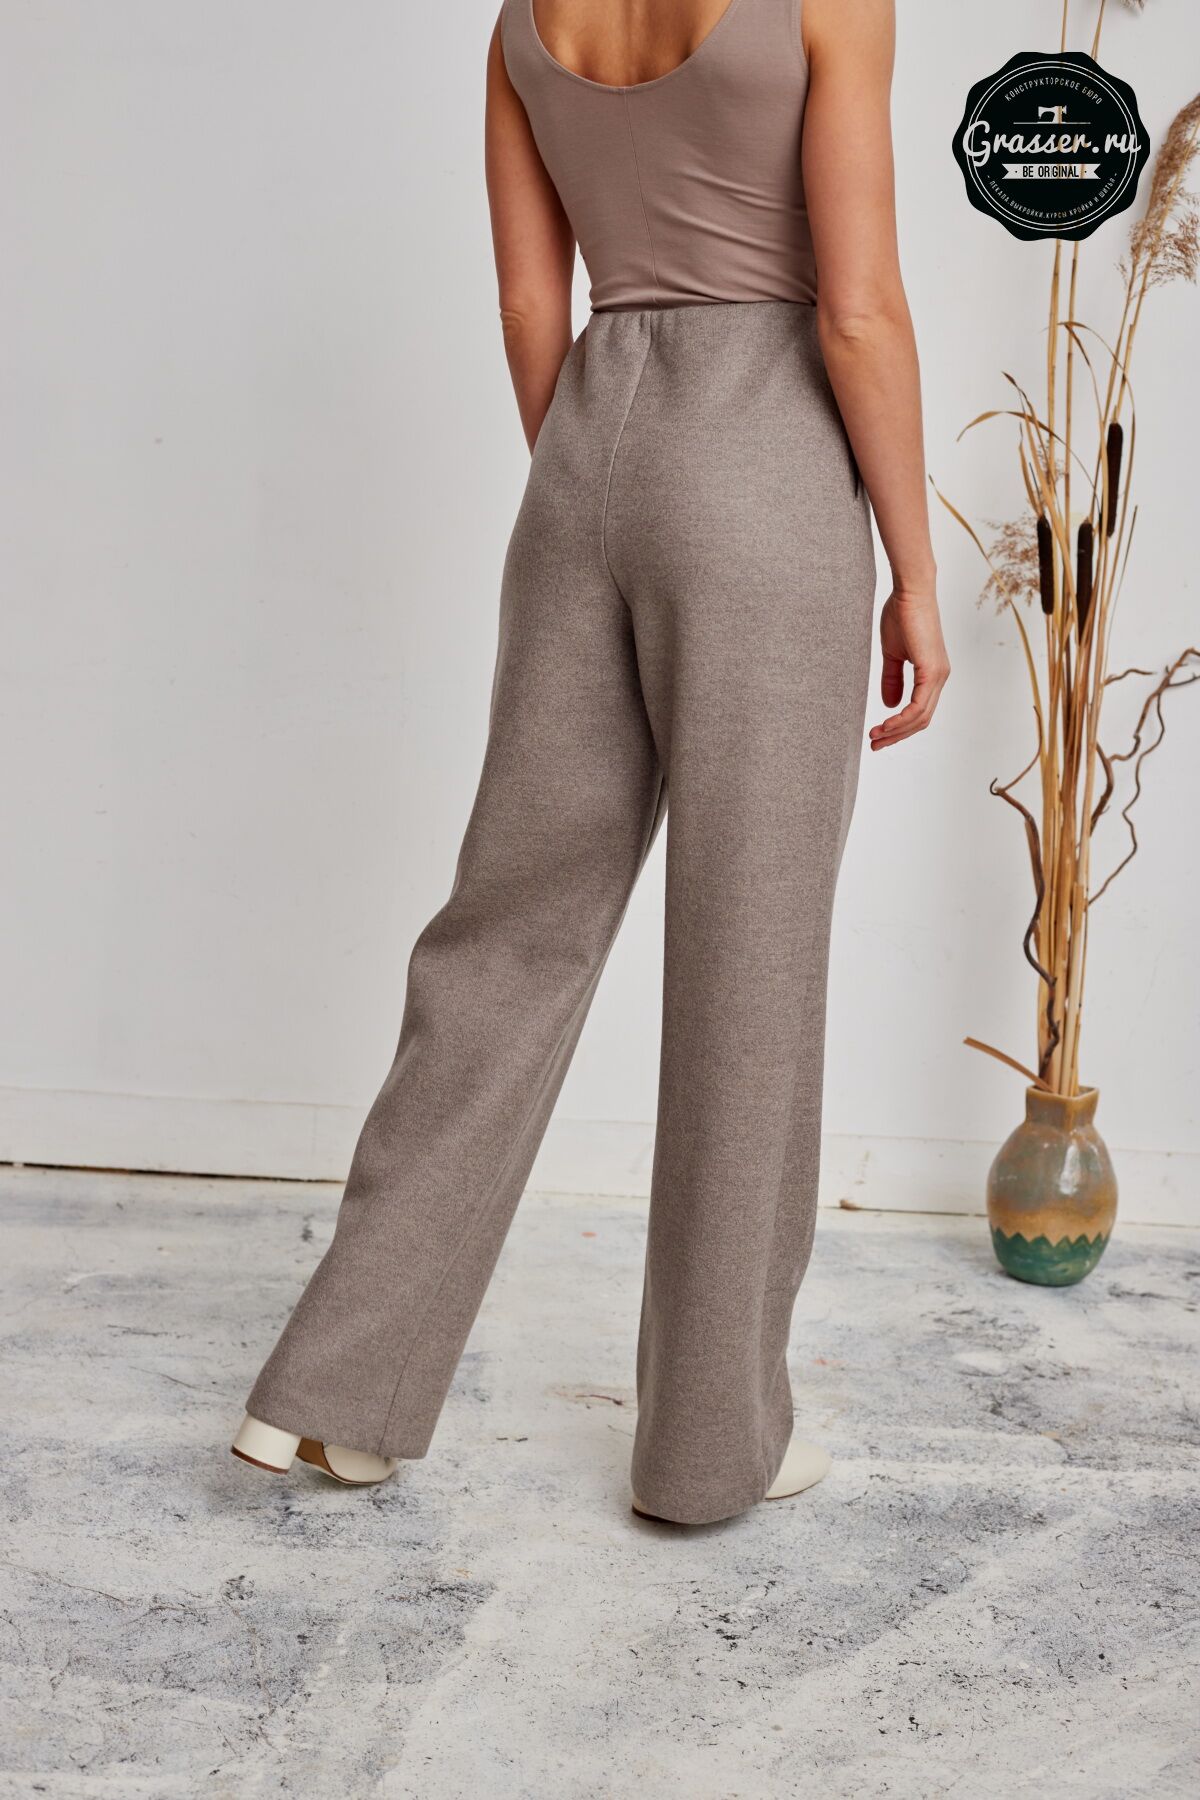 Trousers, pattern №725 buy on-line